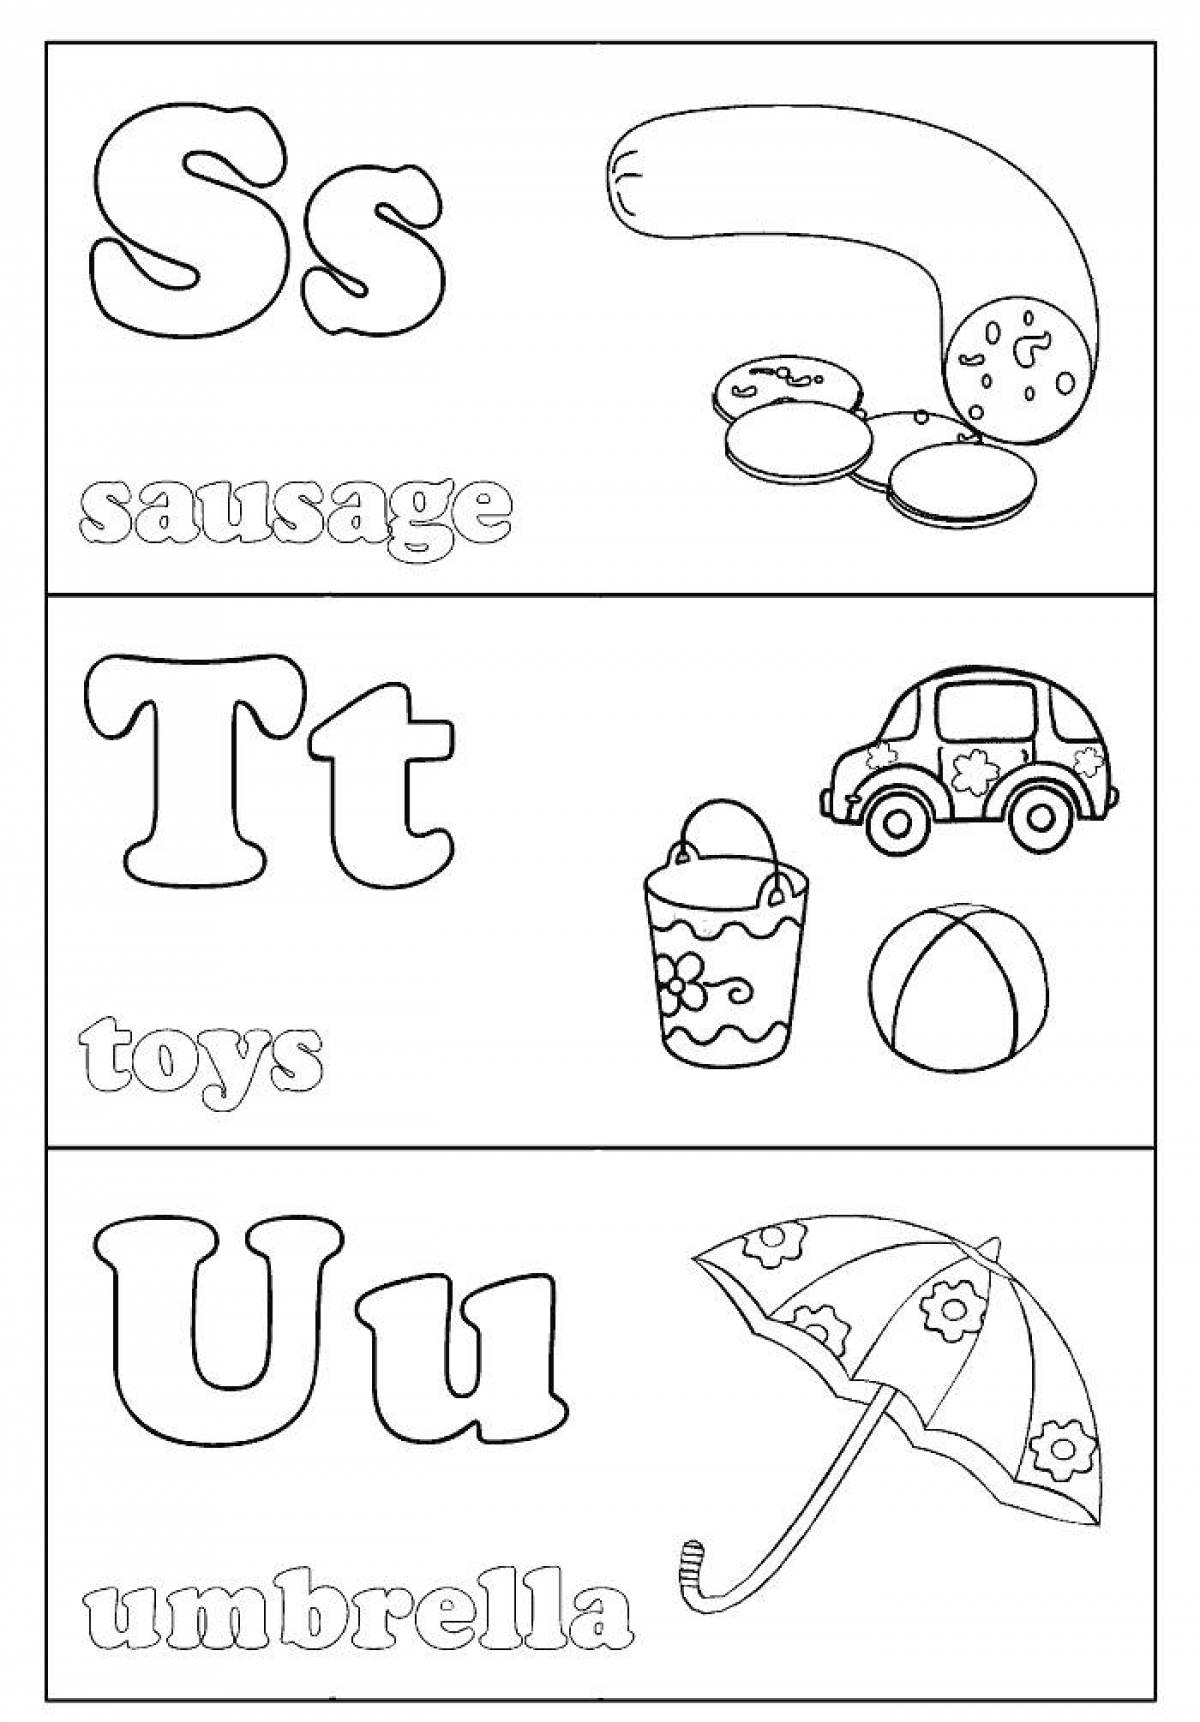 English alphabet for children grade 2 #21